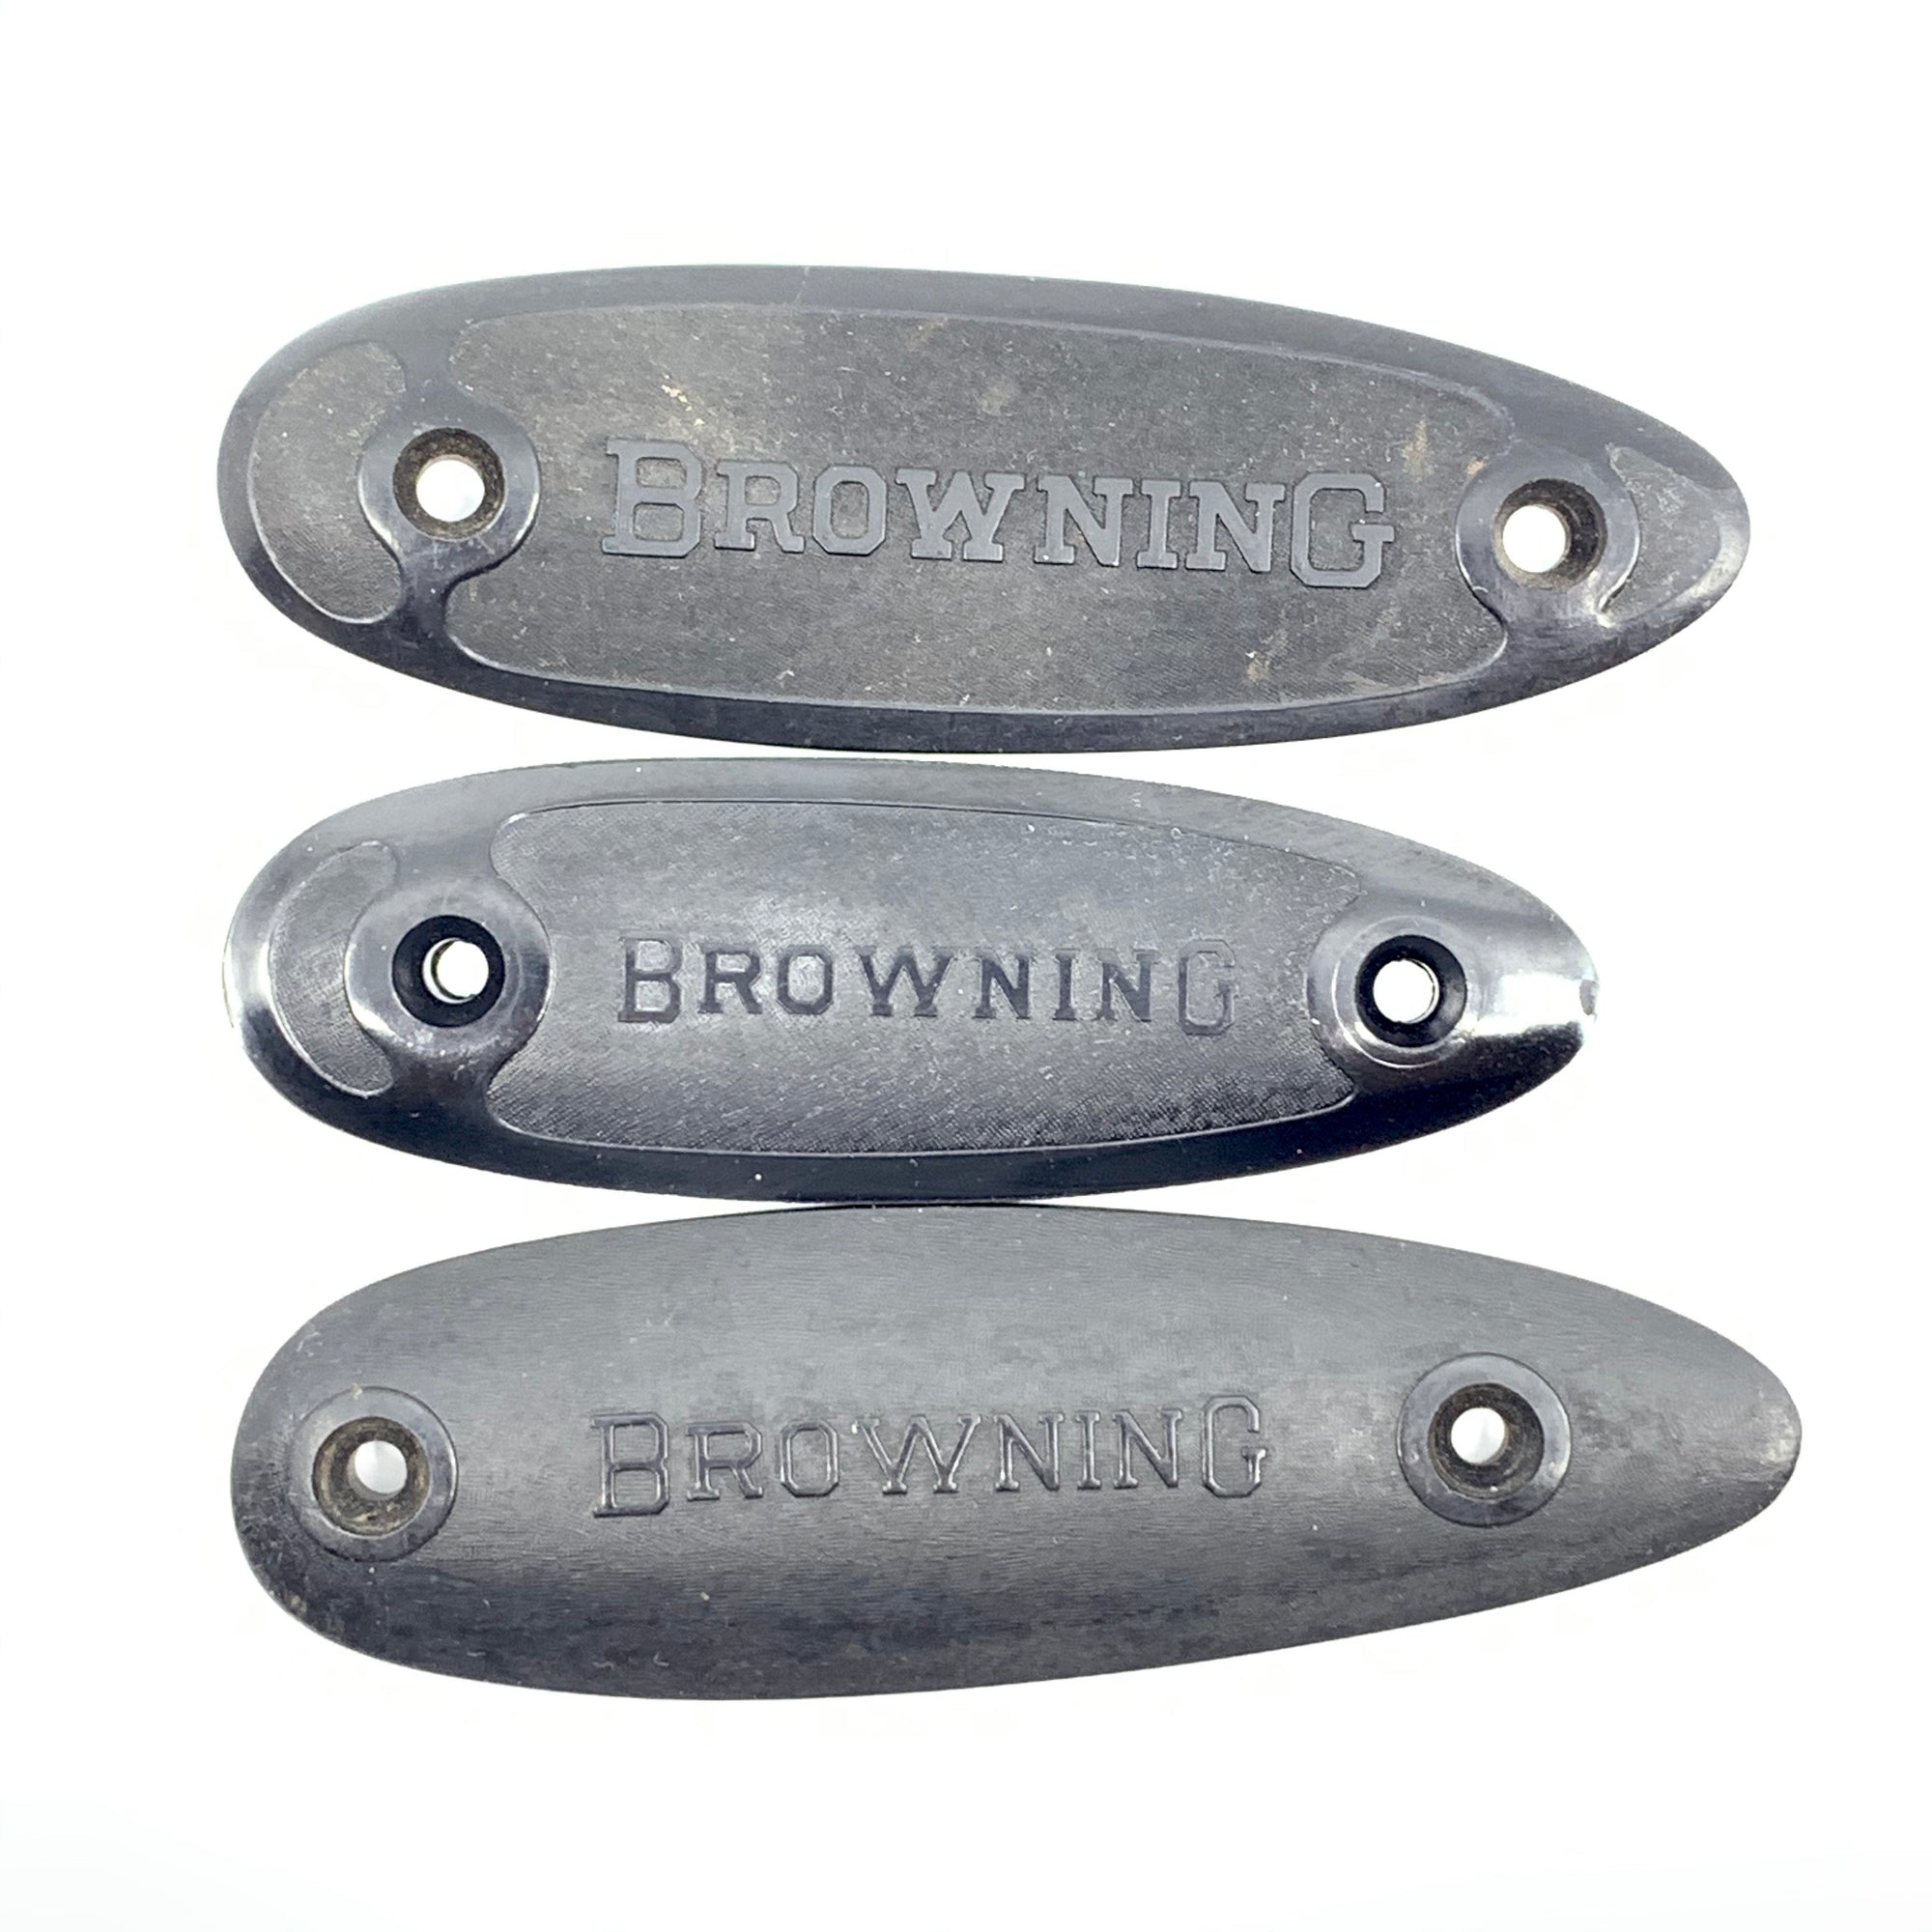 Browning Original Butt Plates Pkg of 3